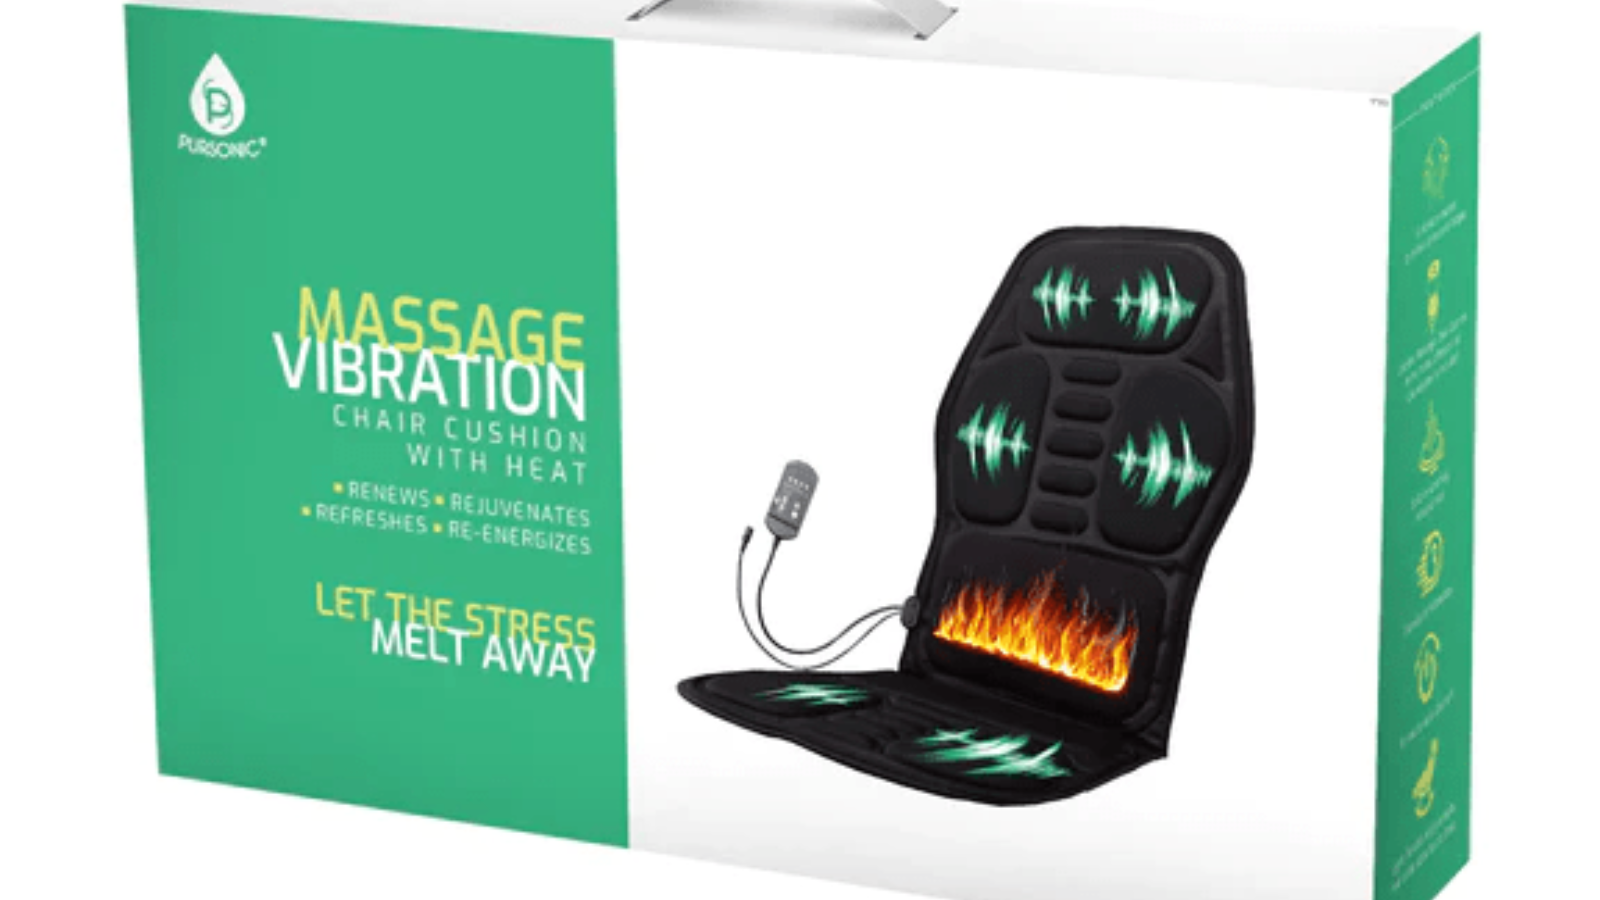 PURSONIC Massage Vibration Chair Cushion with Heat